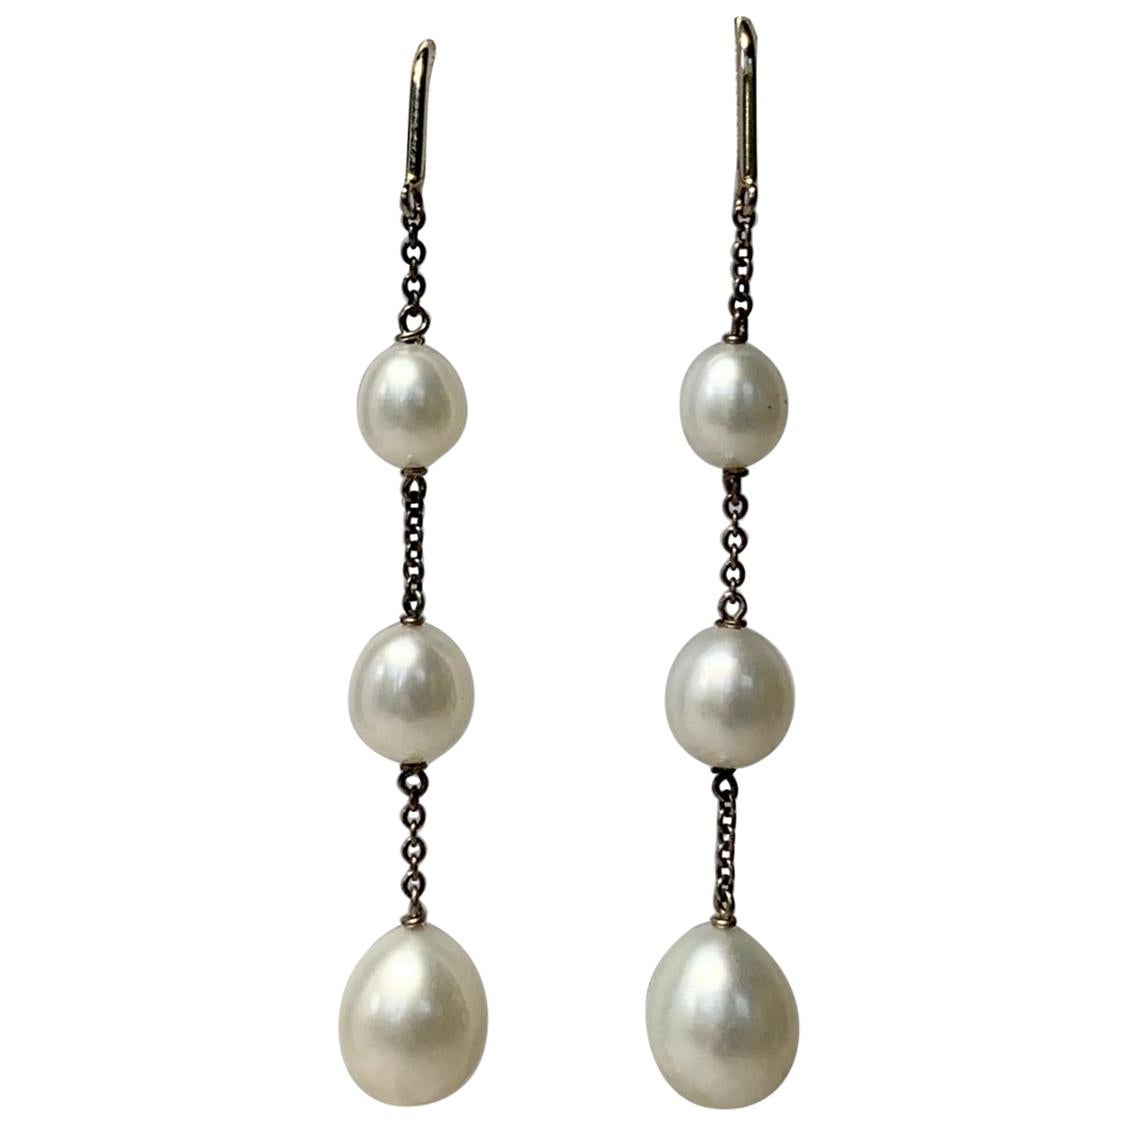 Tiffany & Co. Elsa Peretti Pearls by the Yard Chain Earrings Sterling Silver